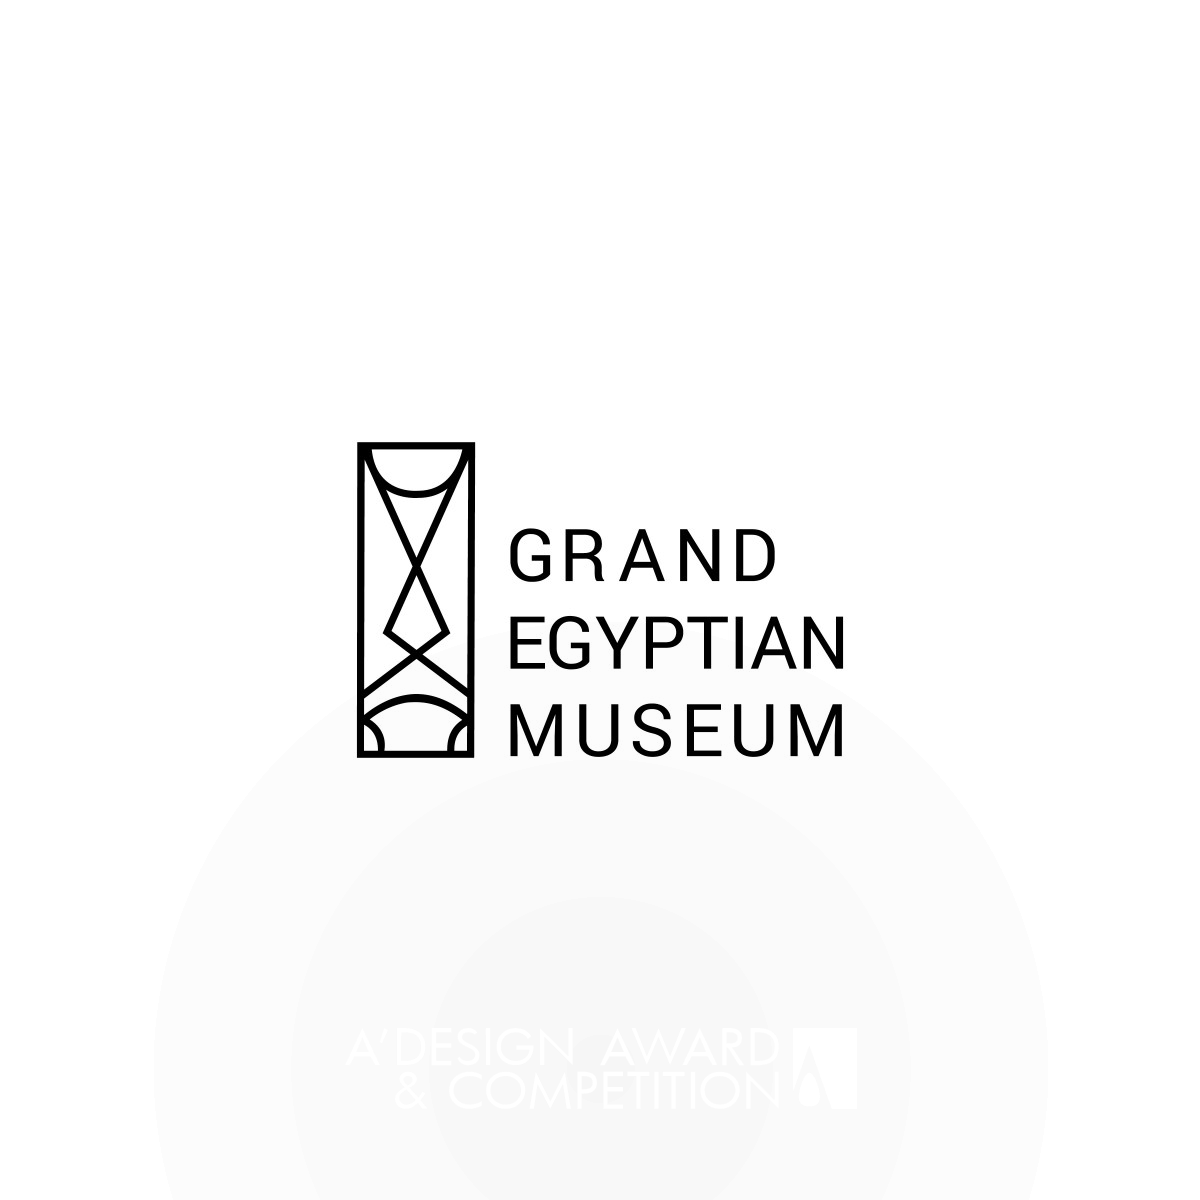 Grand Egyptian Museum <b>Corporate Identity